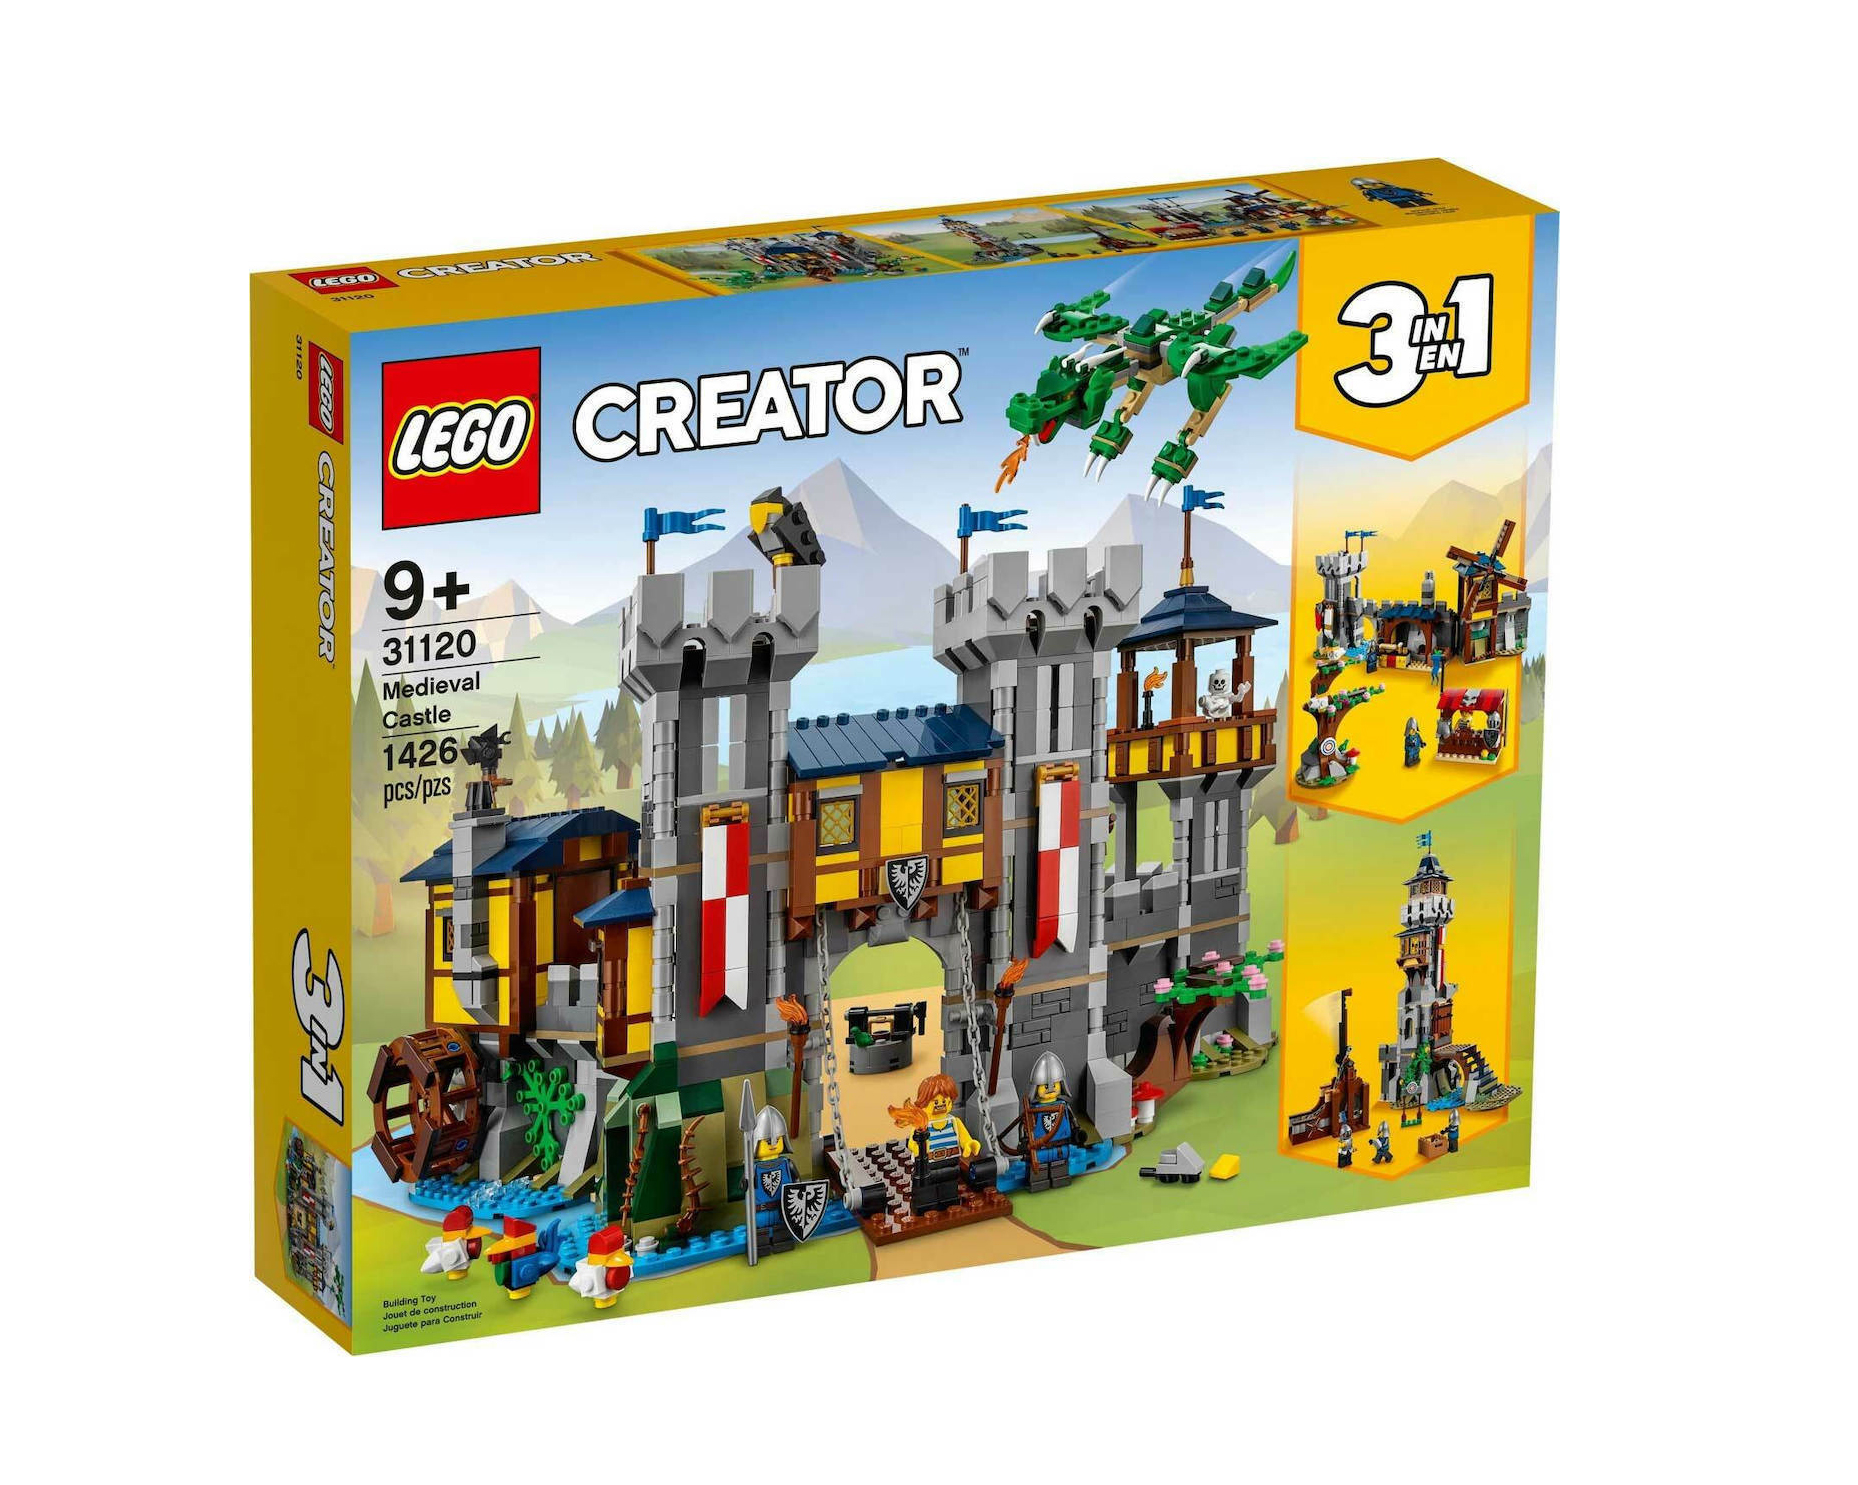 Lego Creator 3-in-1: Medieval Castle 31120